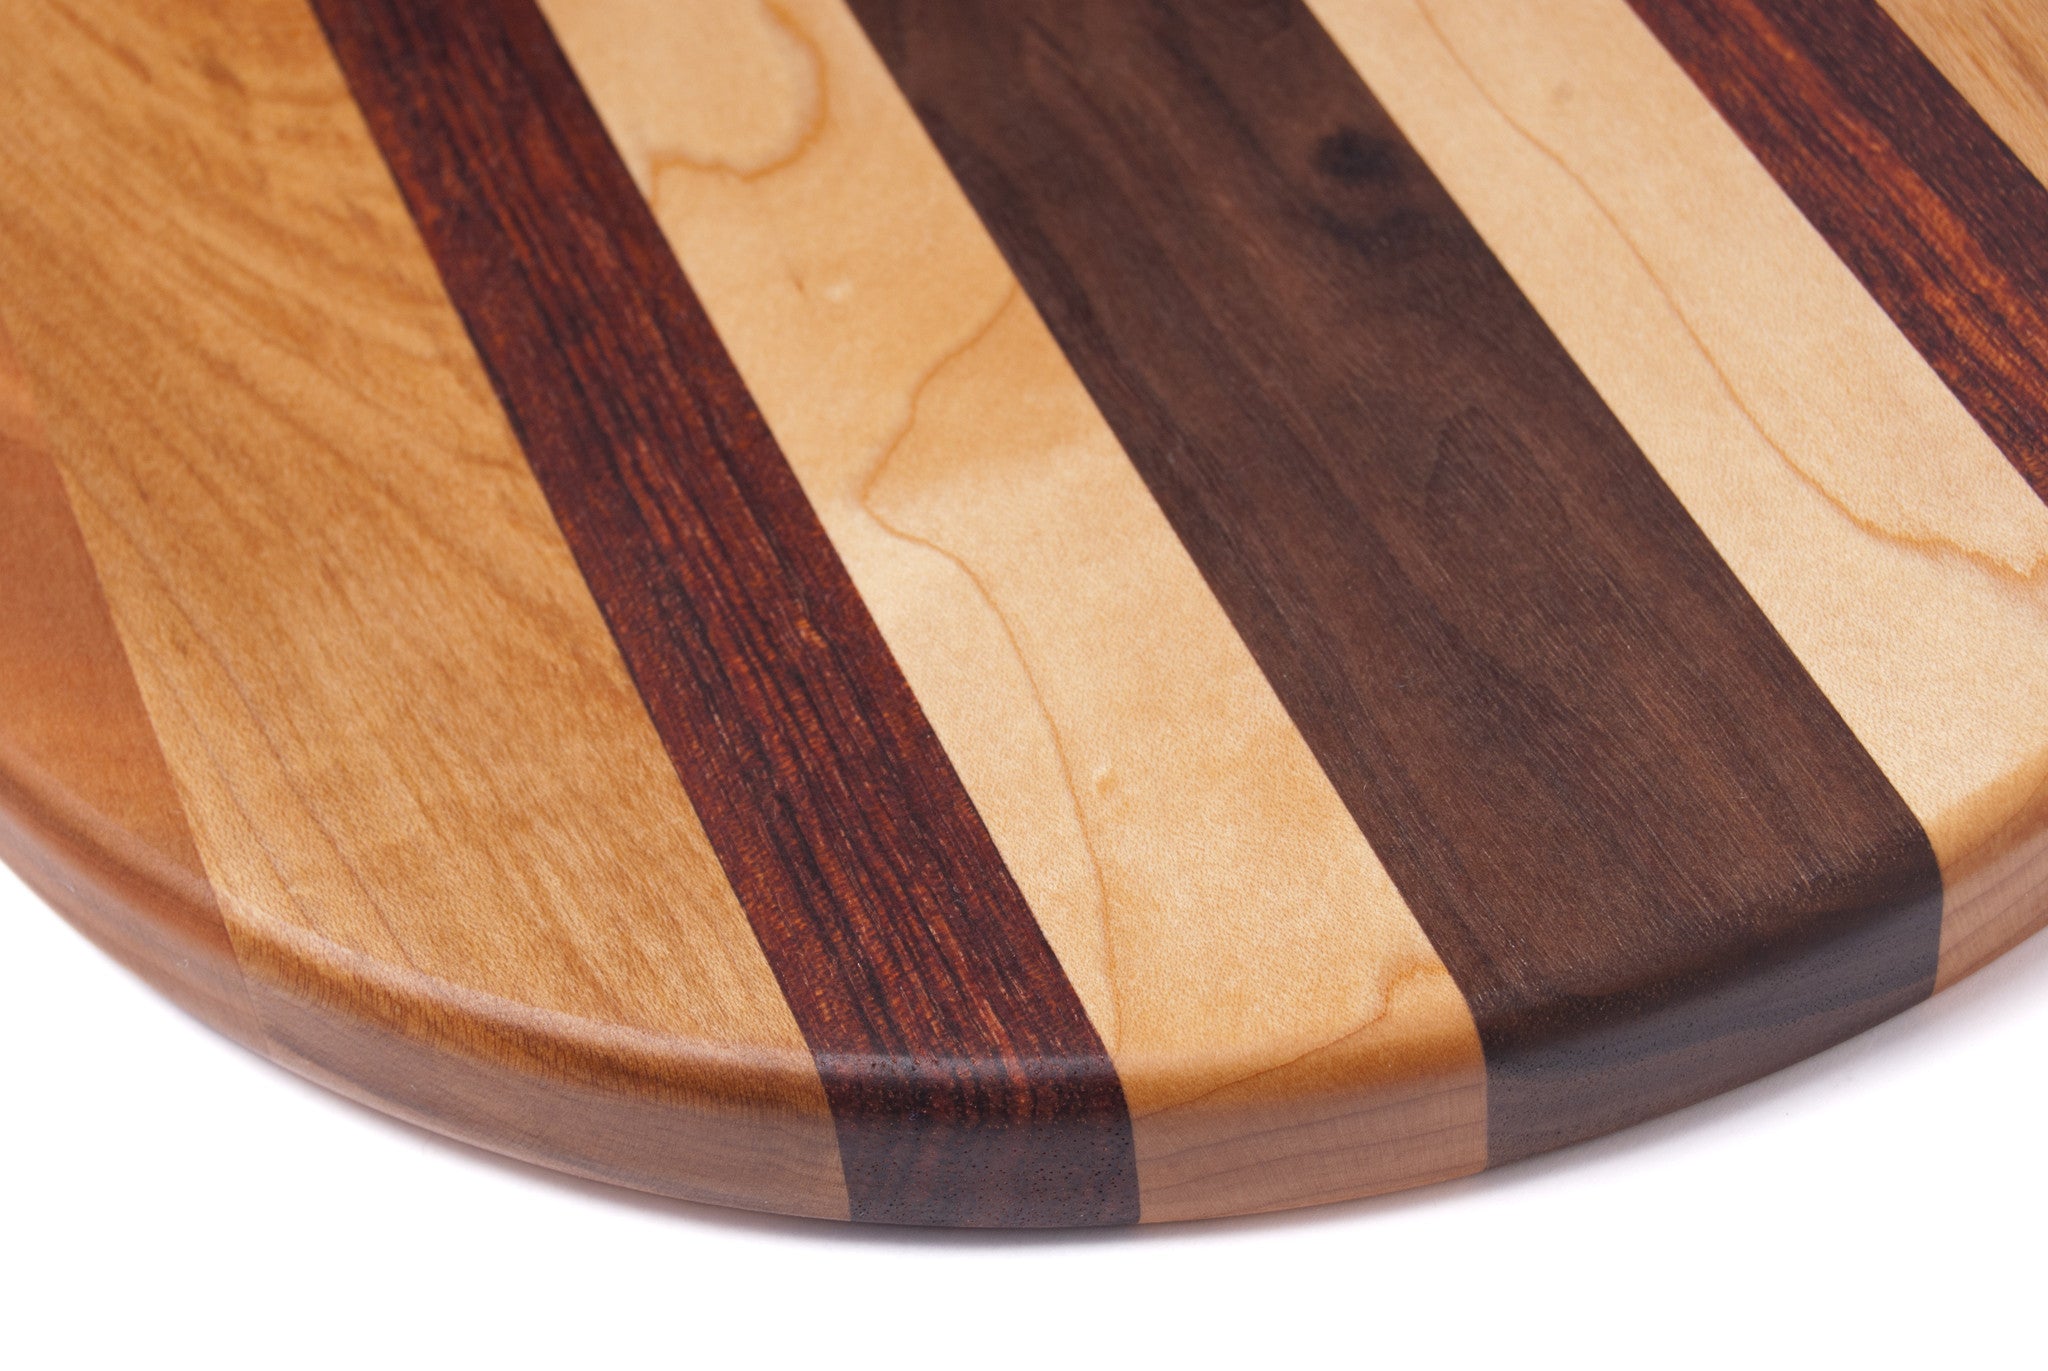 Kessler Woodworking Round Cutting Board The Artisans Bench 